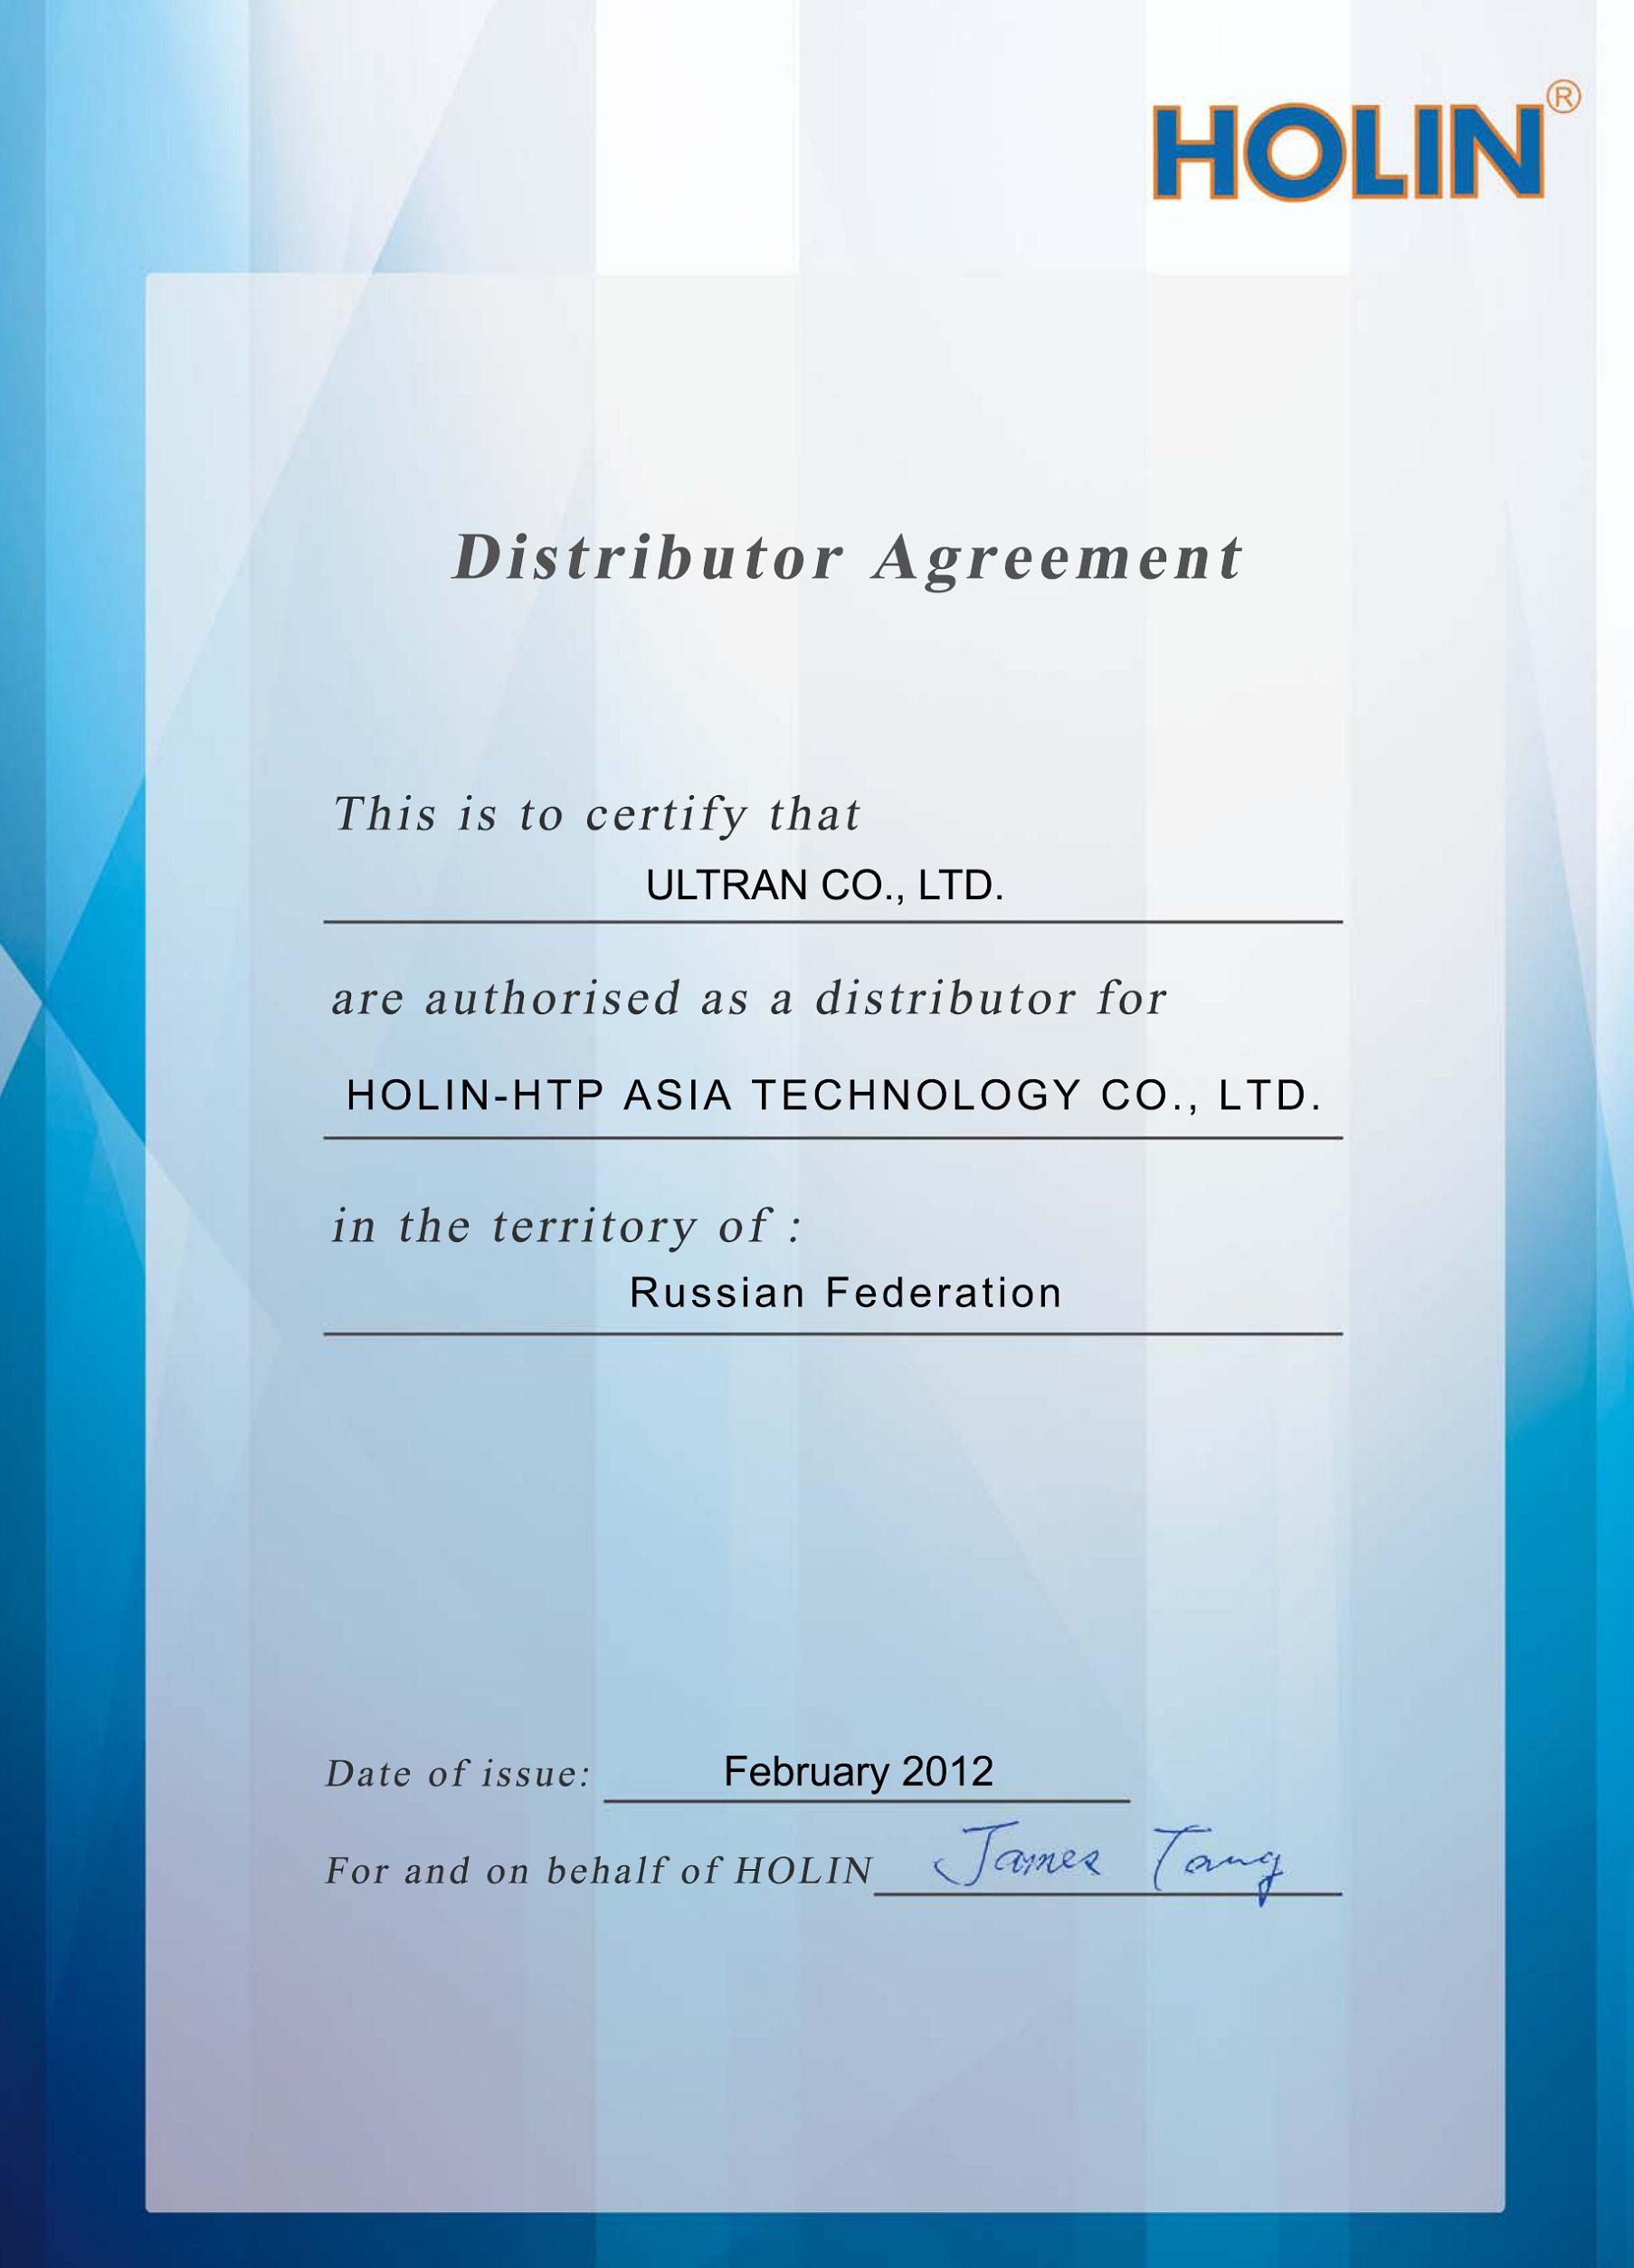 HOLIN-HTP Asia Technology